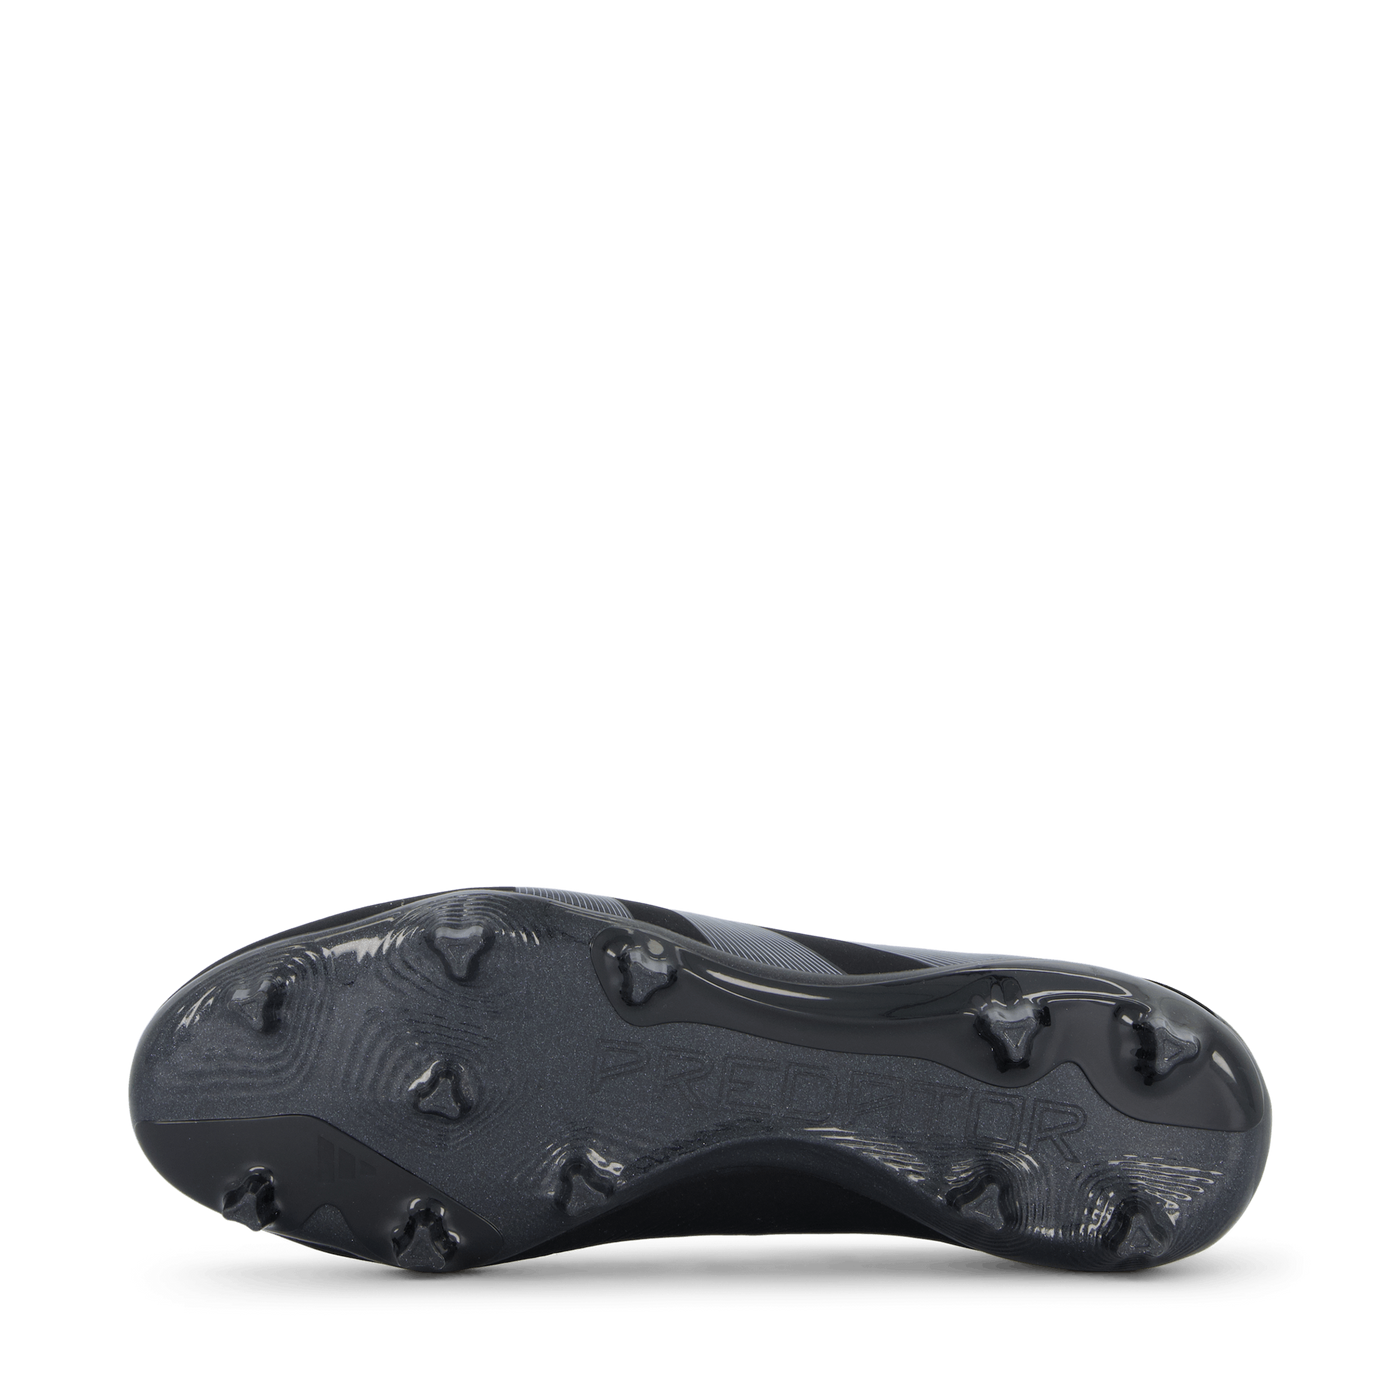 Predator 24 Pro Firm Ground Boots Core Black / Carbon / Core Black